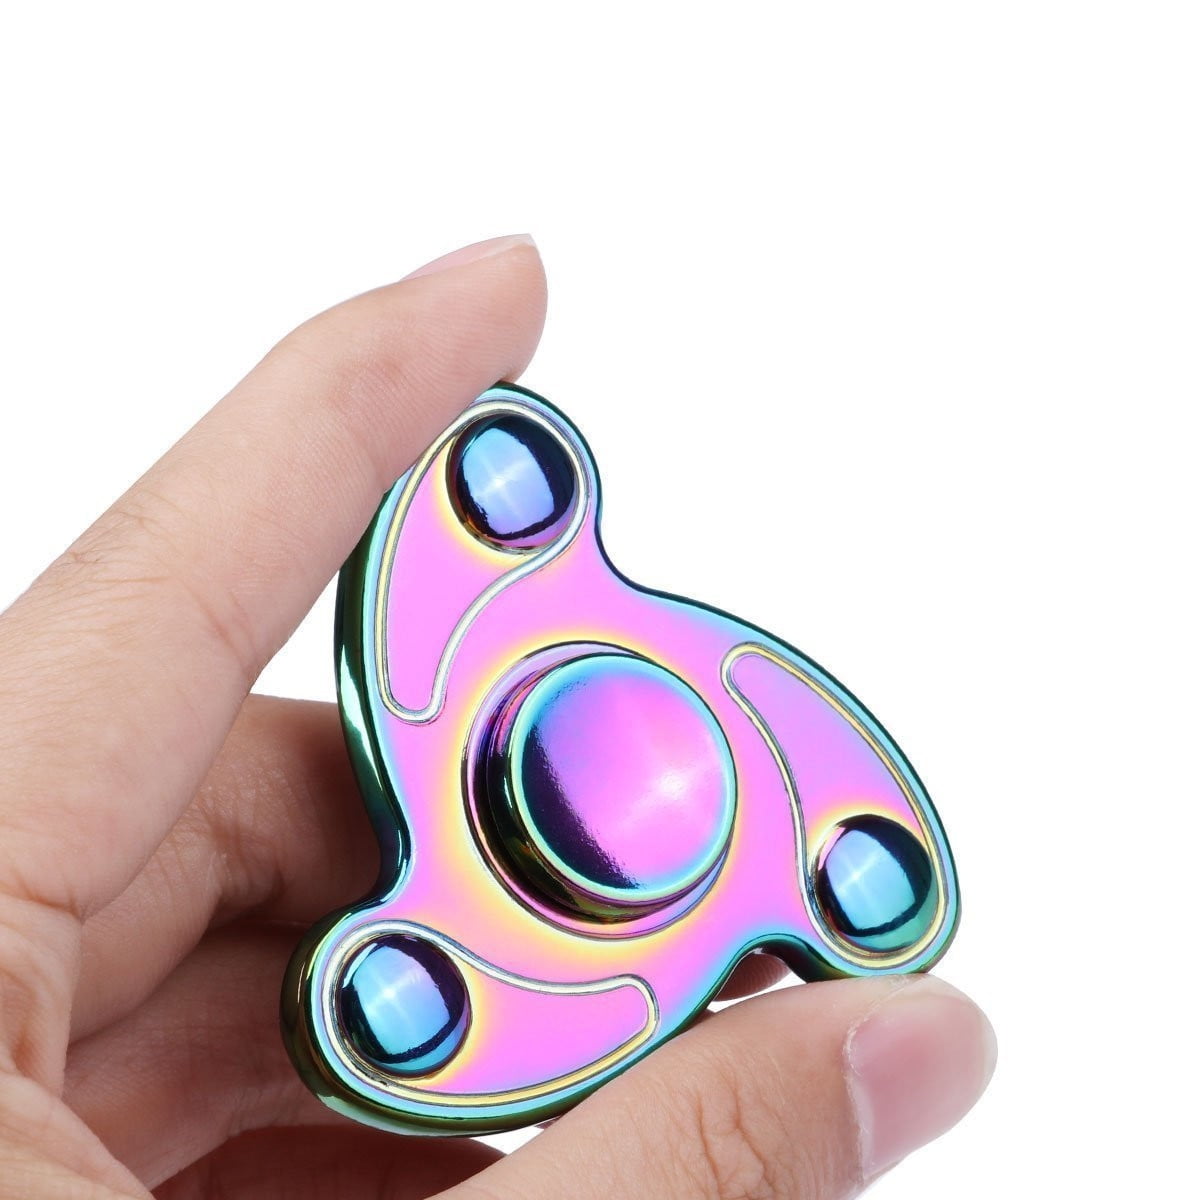 Diamonds EDC Spinner Fidget Toy Metal Hand Finger Focus Fast Gyro Game Toy 